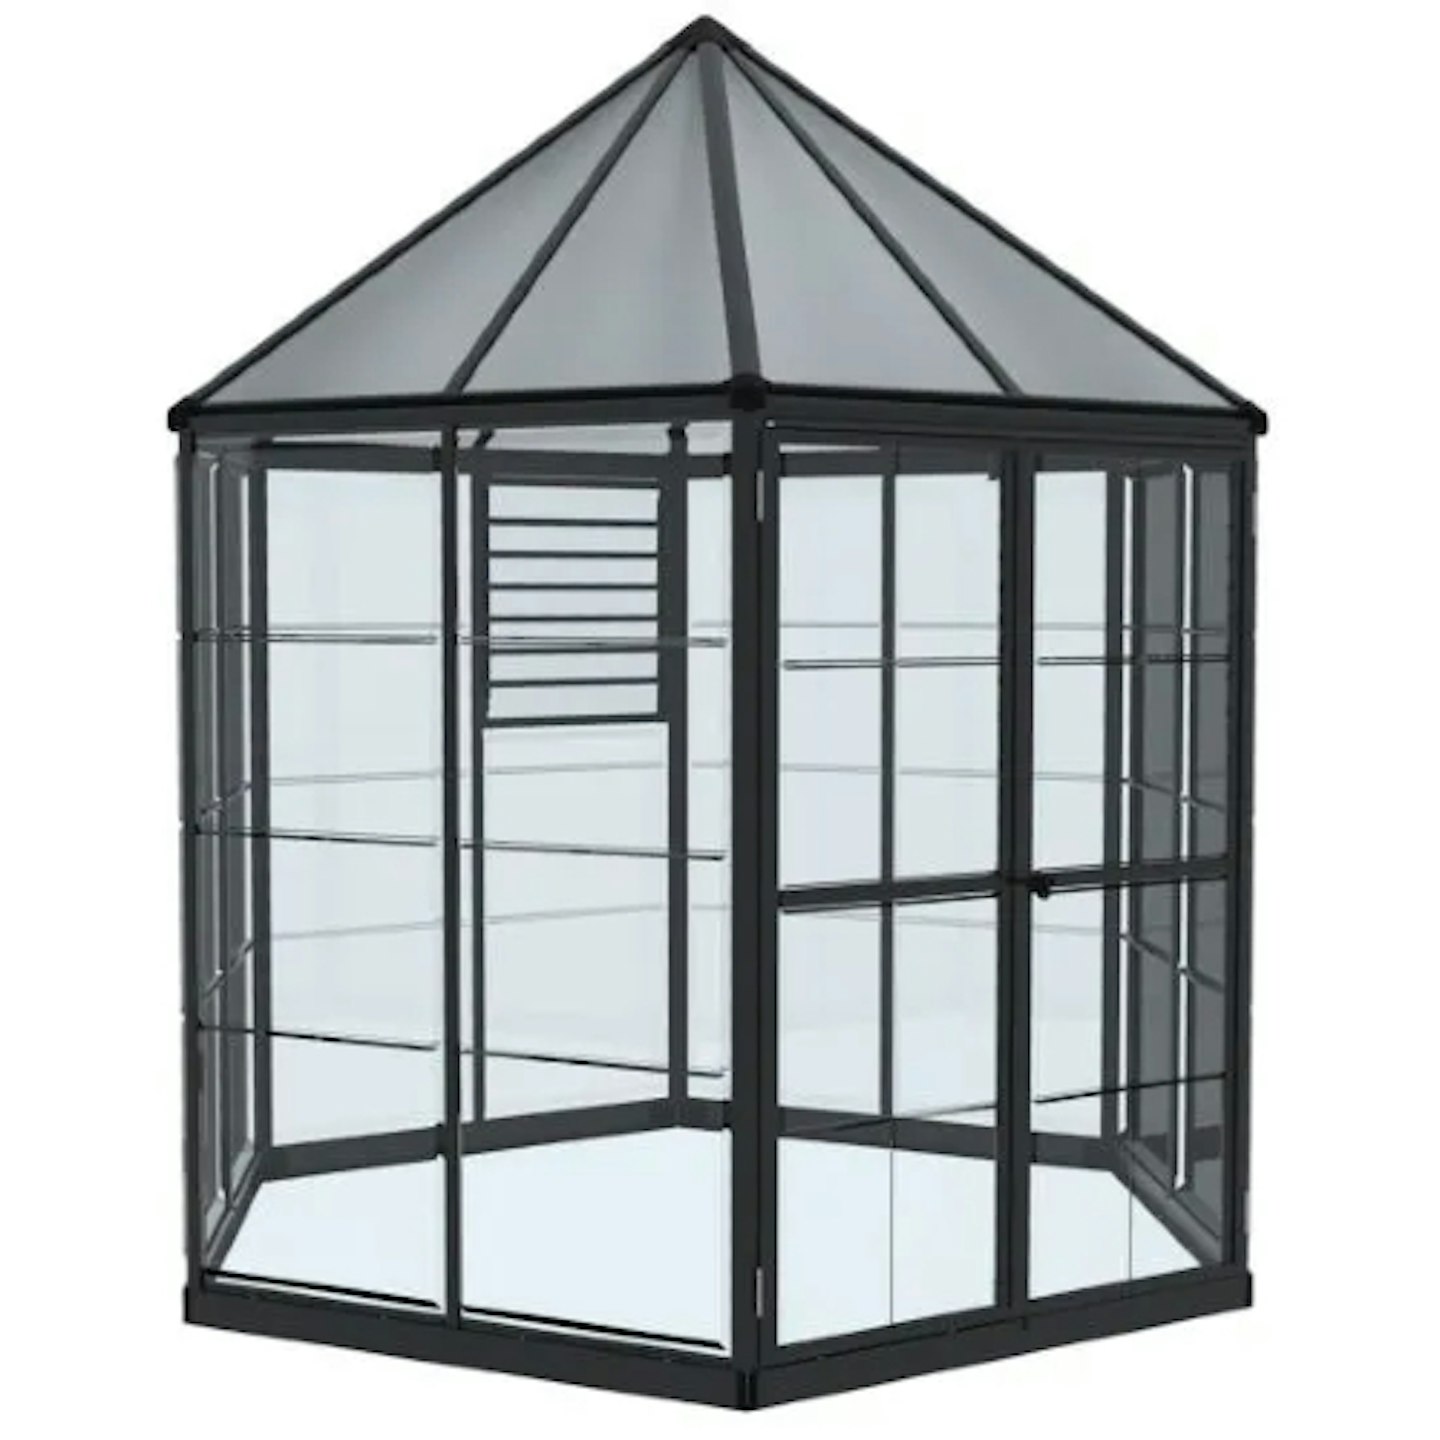 Palram greenhouse 